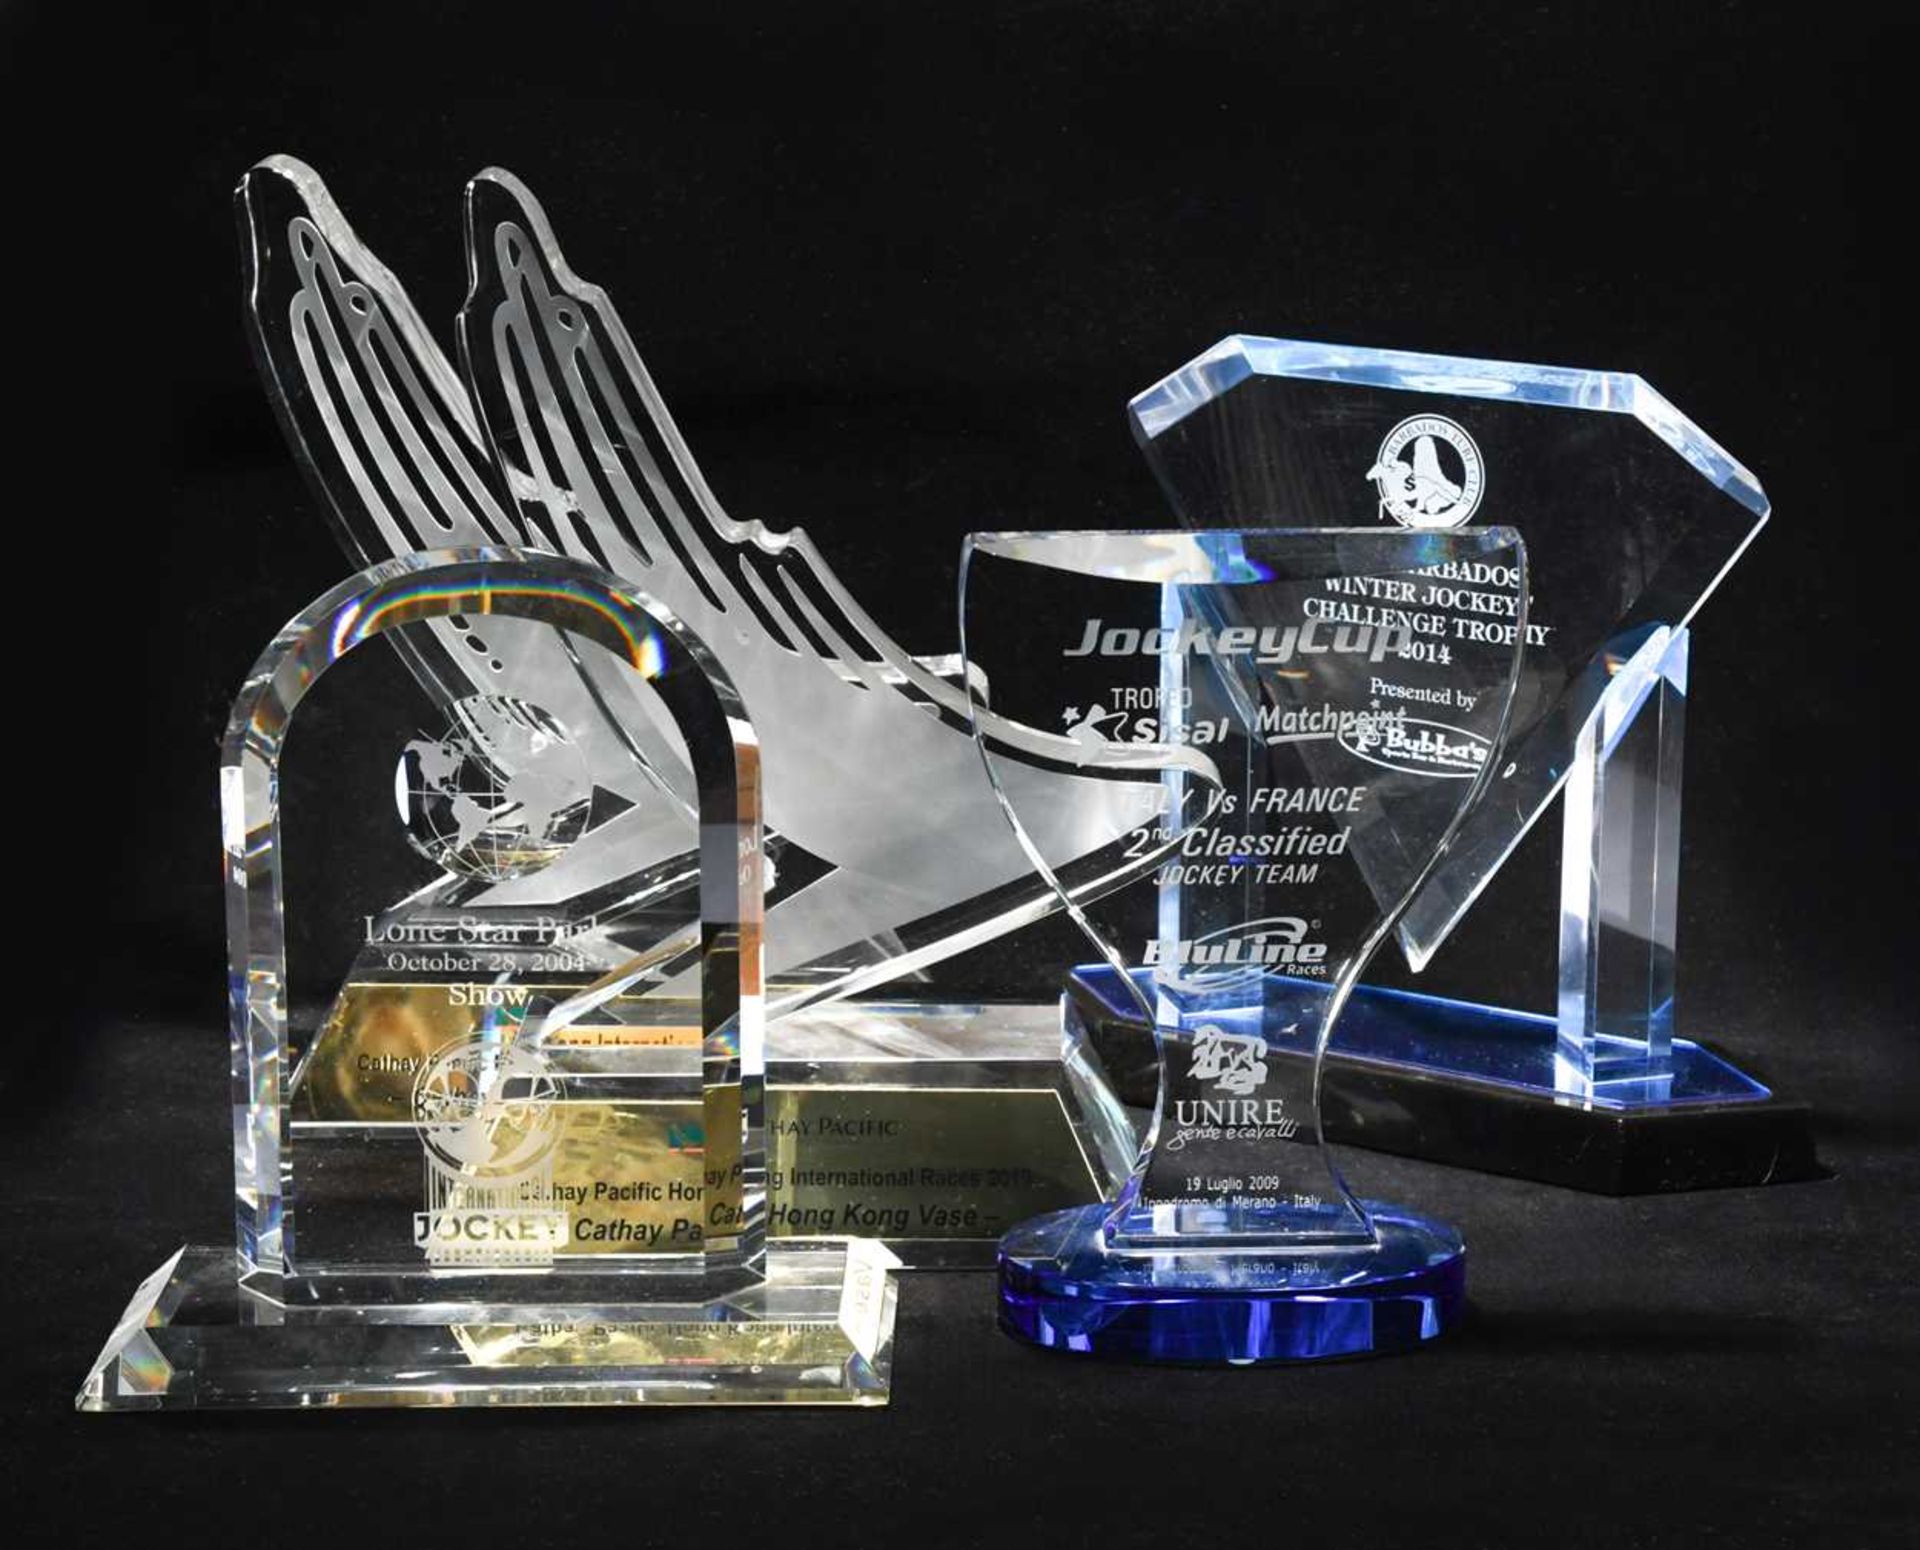 A G2 Darley Prix Robert Papin cut glass trophy, awarded to Frankie Dettori,